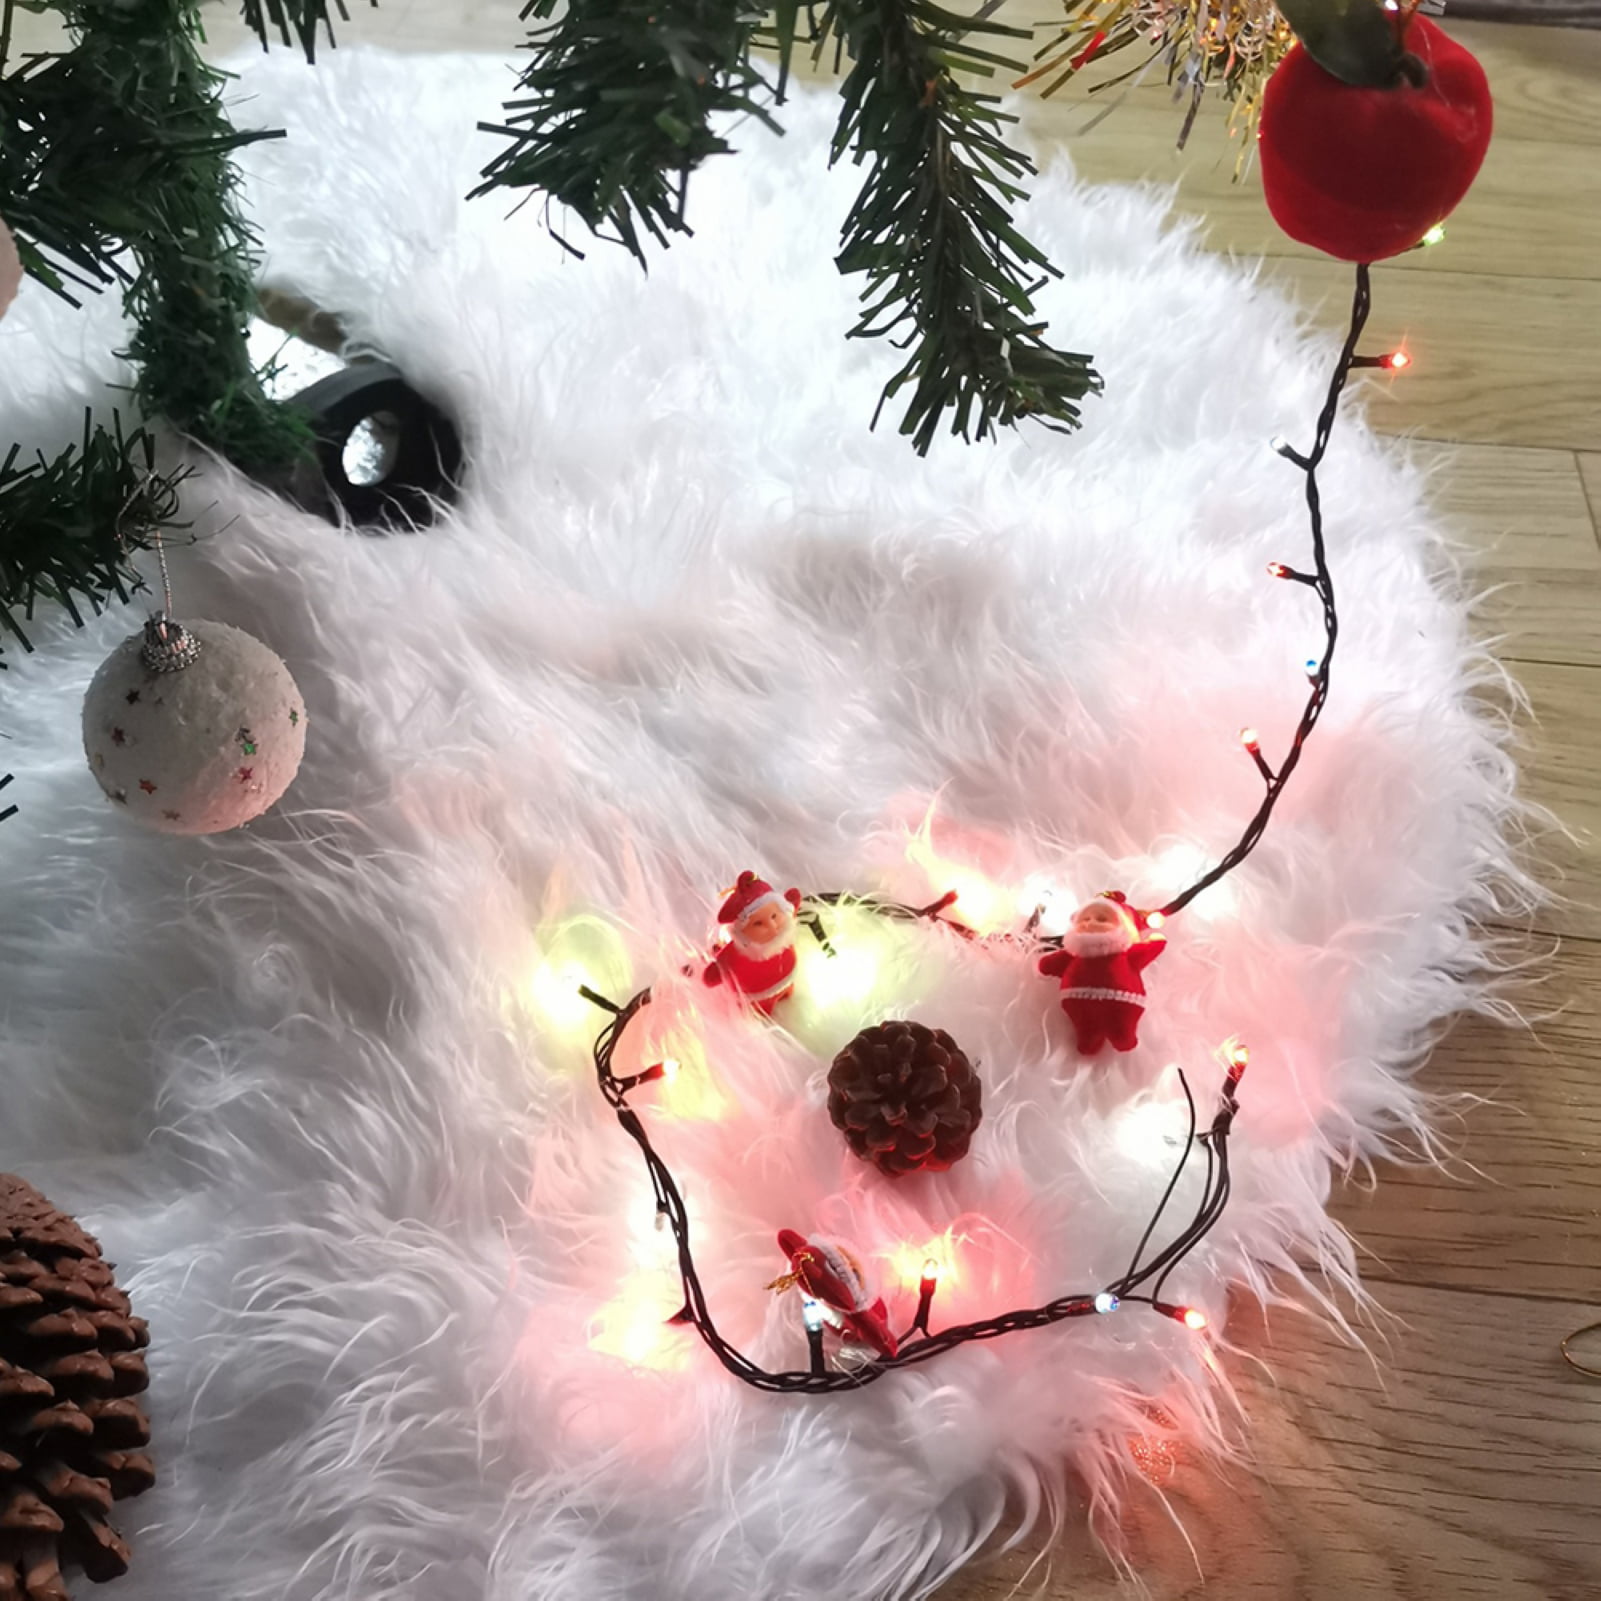 Christmas Tree Long Snow Plush Skirt Base Floor Mat Cover Xmas Snowflake Decor 